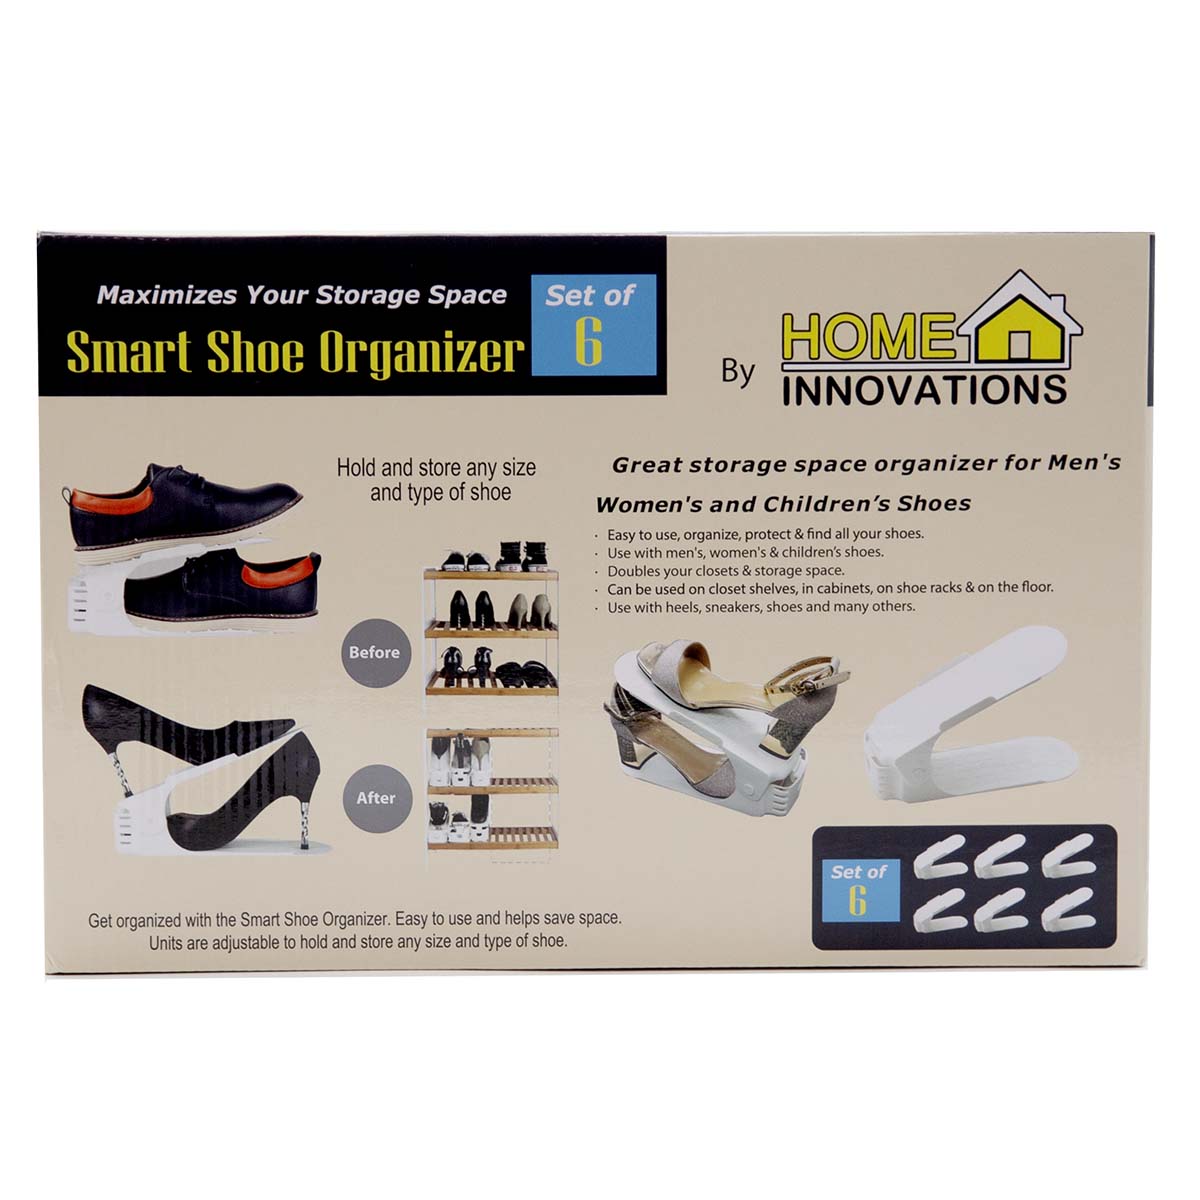 Home Innovations Smart Shoe Organizer Maximize Storage Space! Set